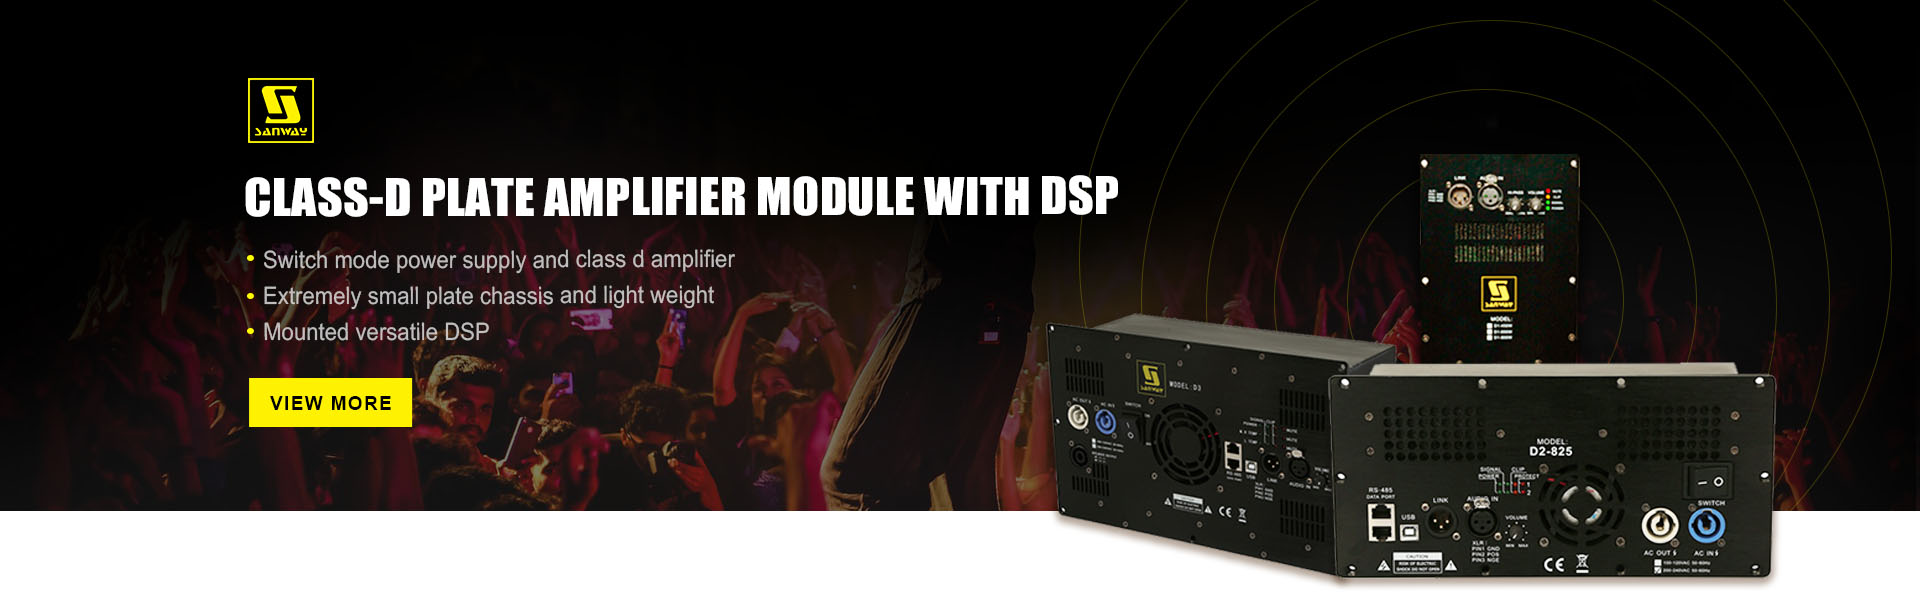 Class-D plate amplifier module with DSP banner